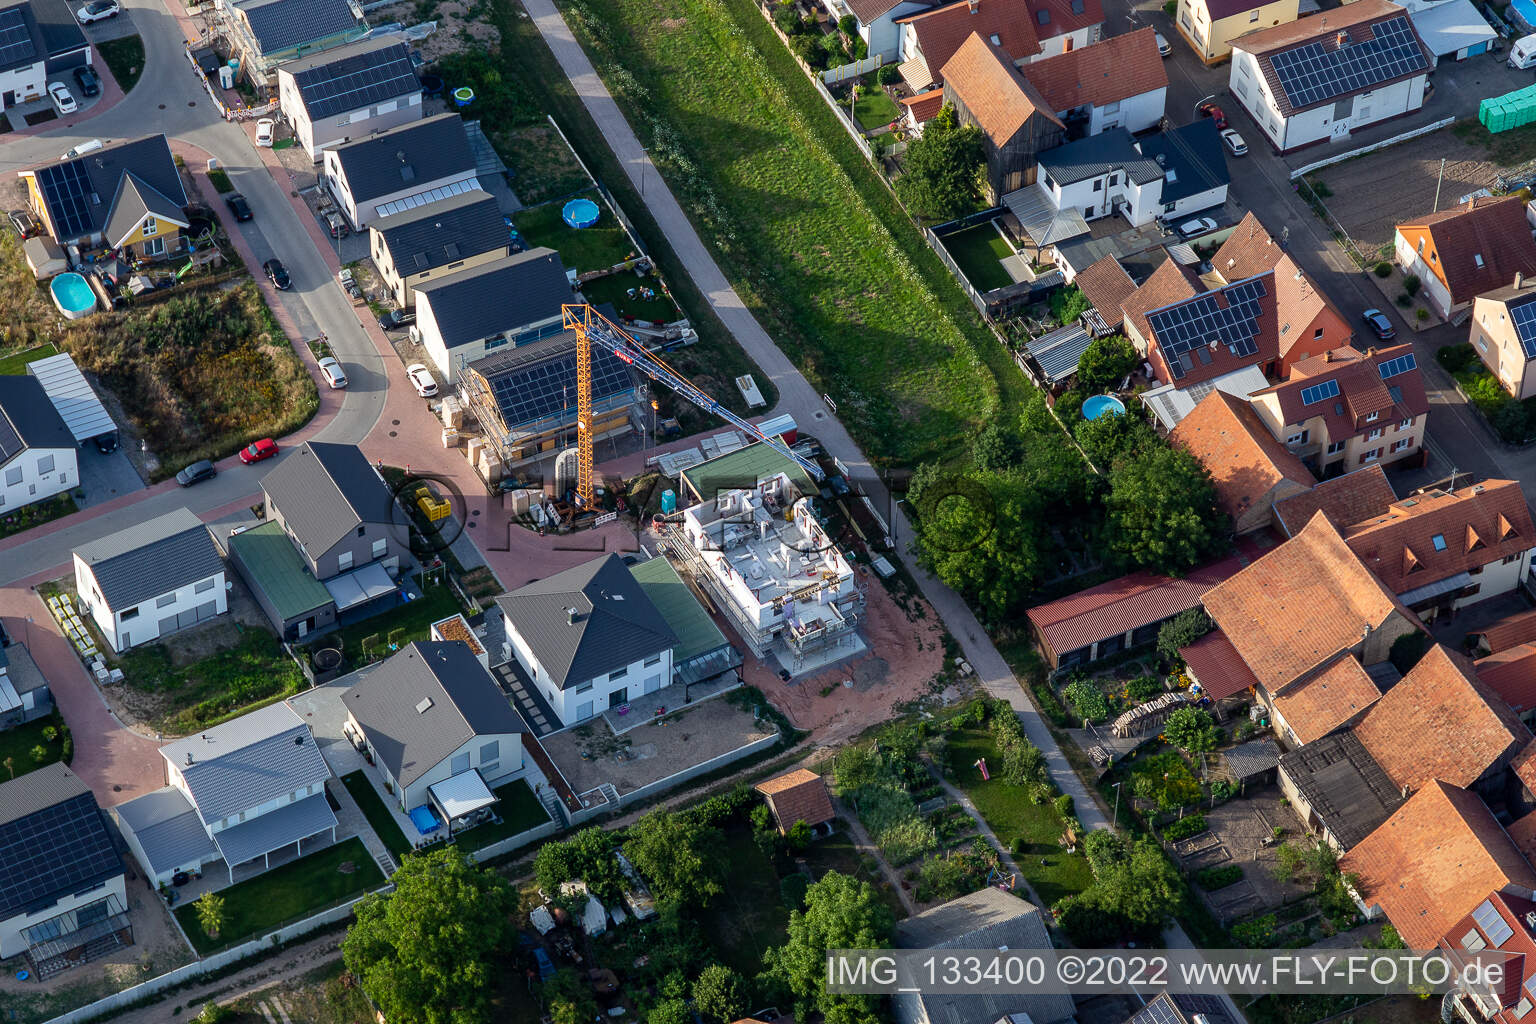 Aerial photograpy of New development area in Sandblatt in Hatzenbühl in the state Rhineland-Palatinate, Germany